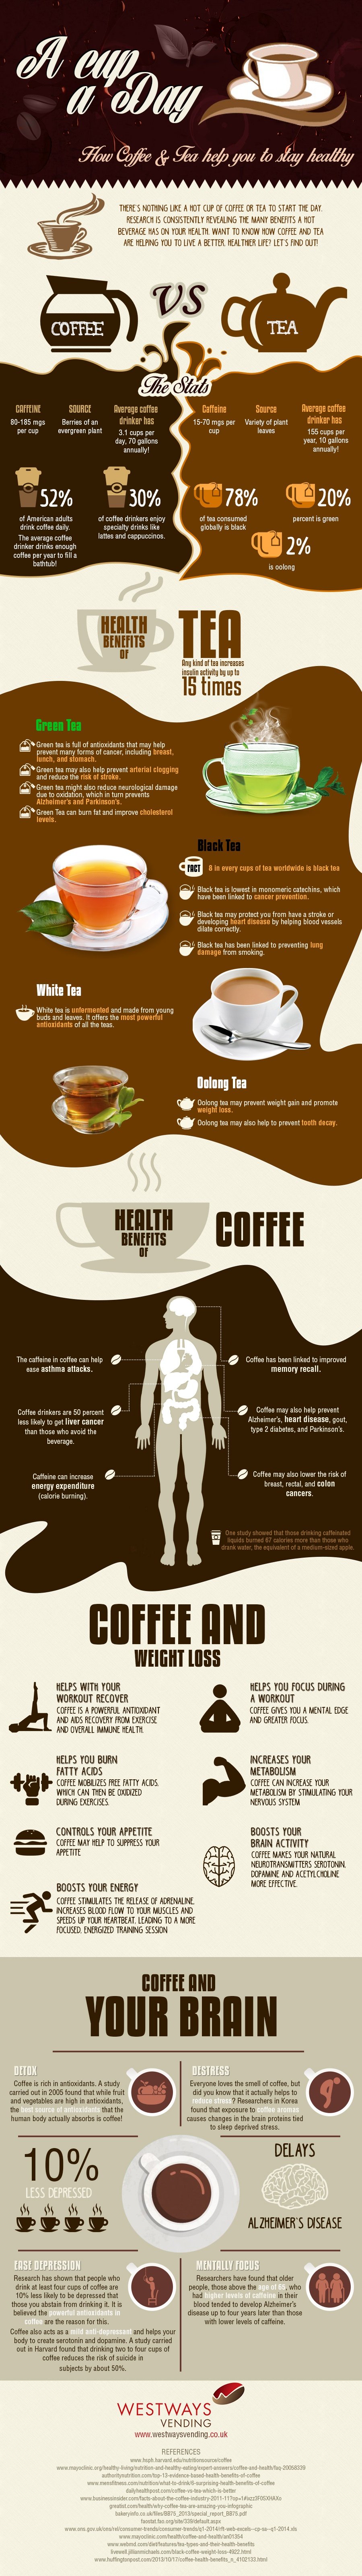 Health-Benefits-of-Coffee-Tea-Infographic